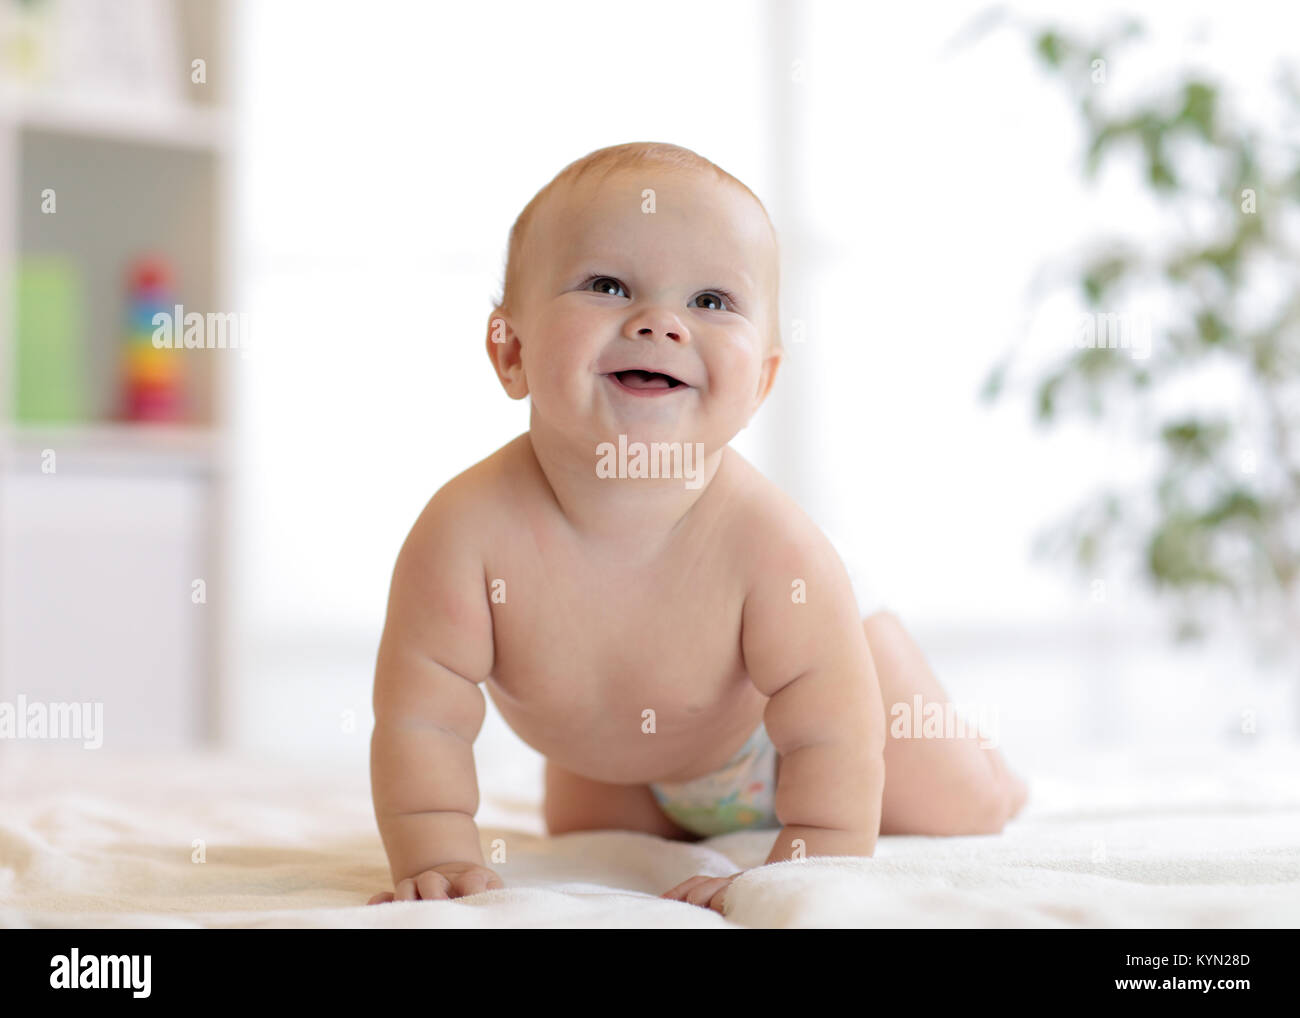 Bastante rastrero Baby Boy desgastada pañal mirando hacia arriba Foto de stock